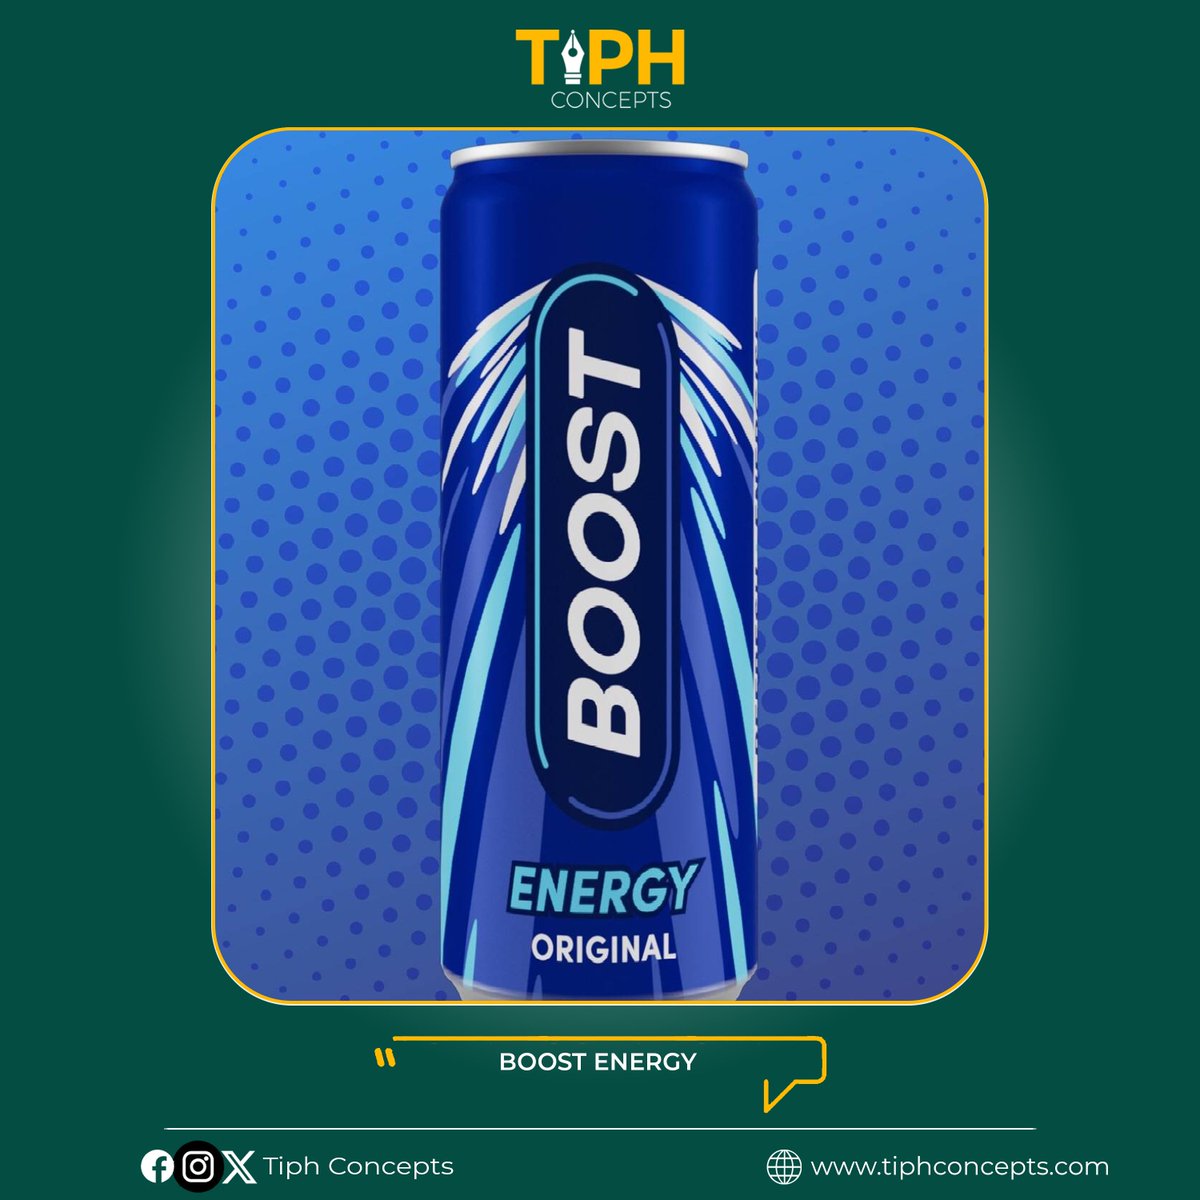 Boost your savings. Drink Boost ⚡️

#boostenergy #energydrink #moneysaving #fyp #branding #tiphconcepts #branding